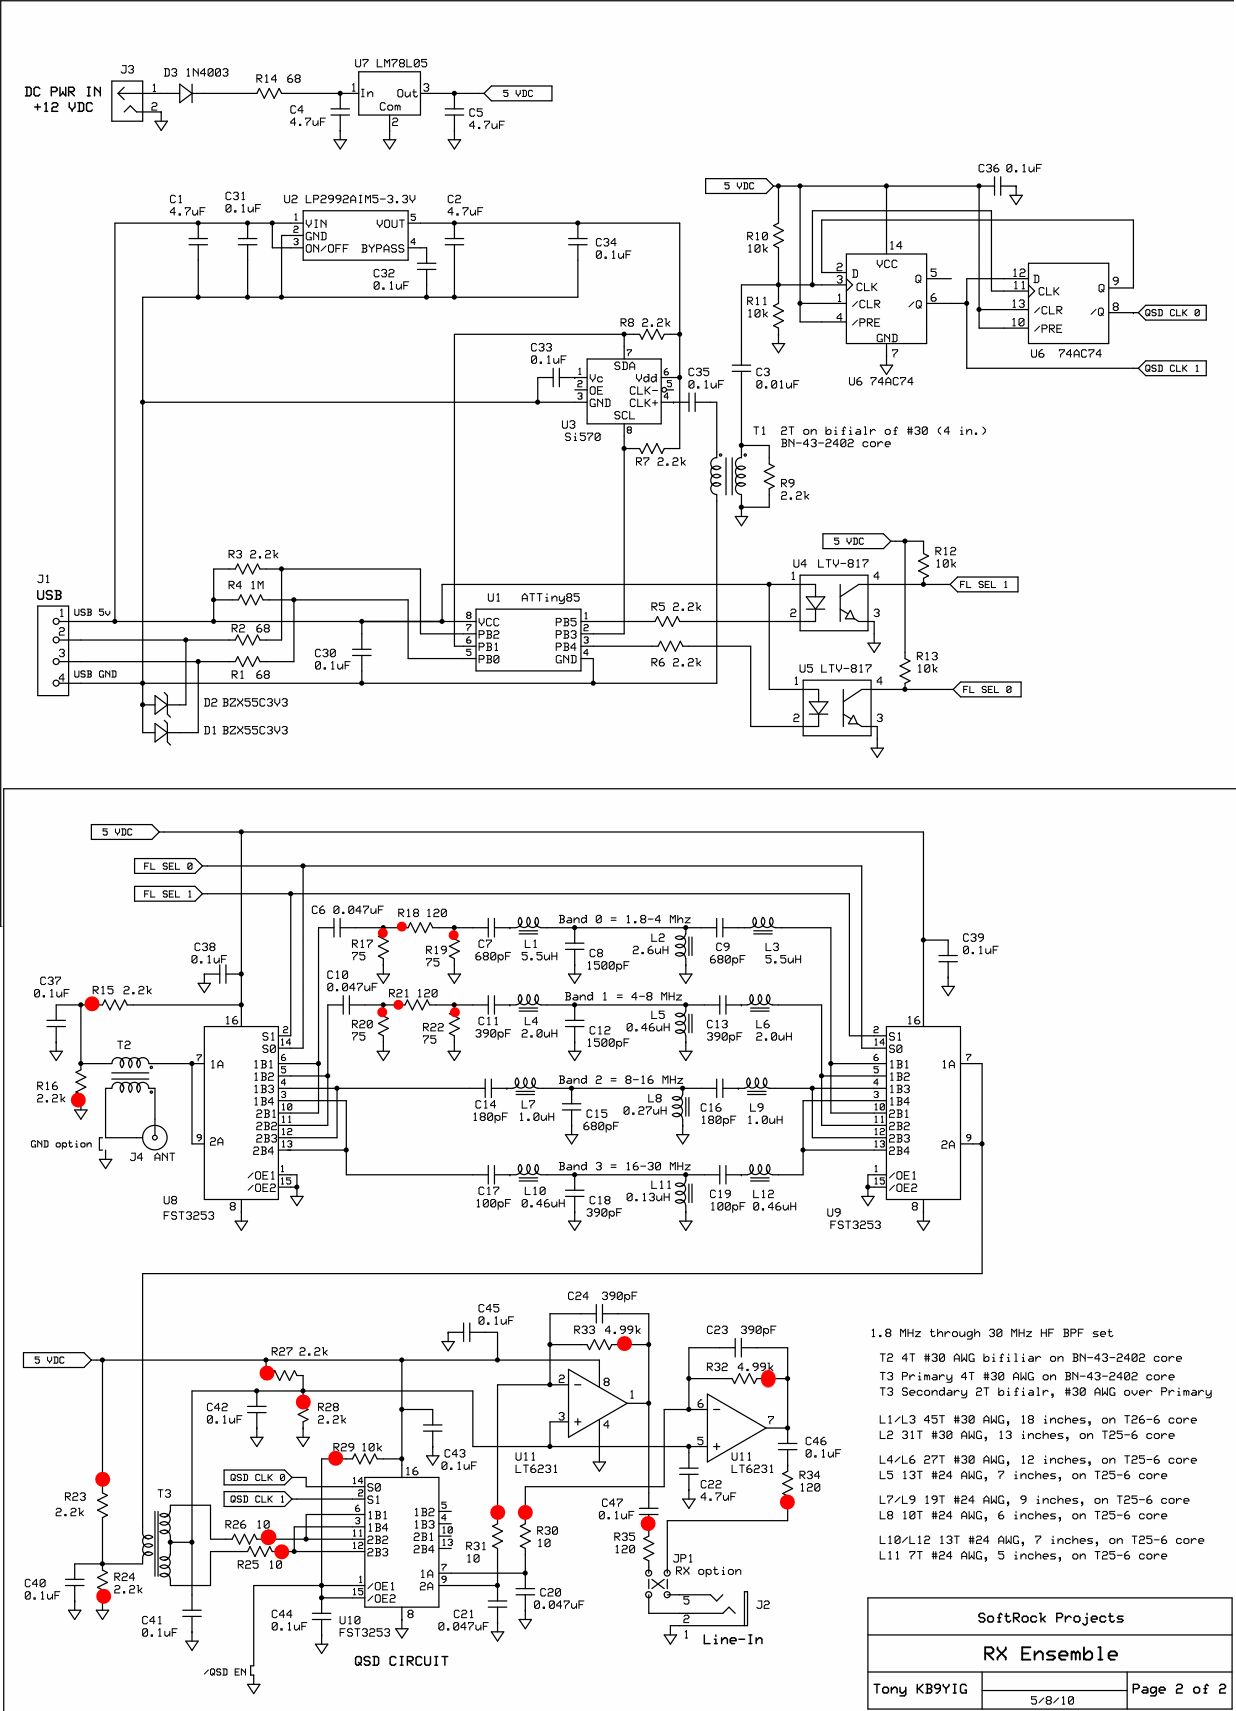 Main Circuit Schematic(s)